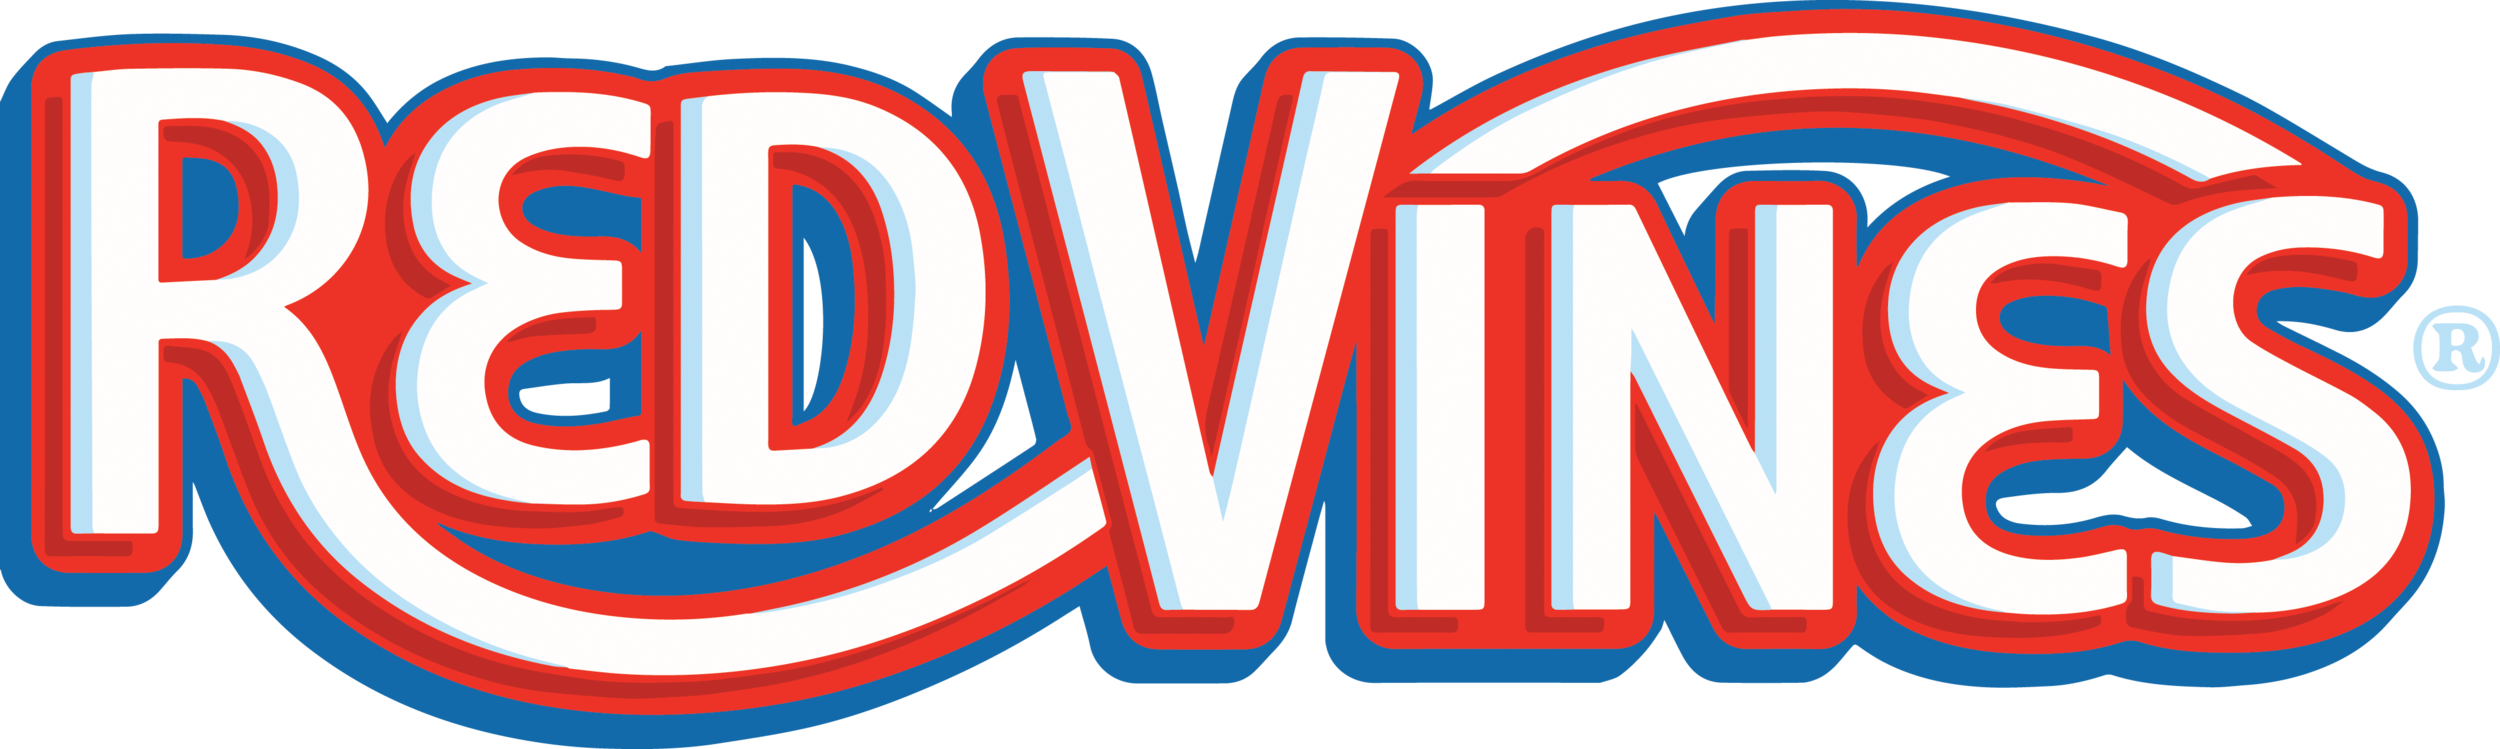 RedVines Logo.png